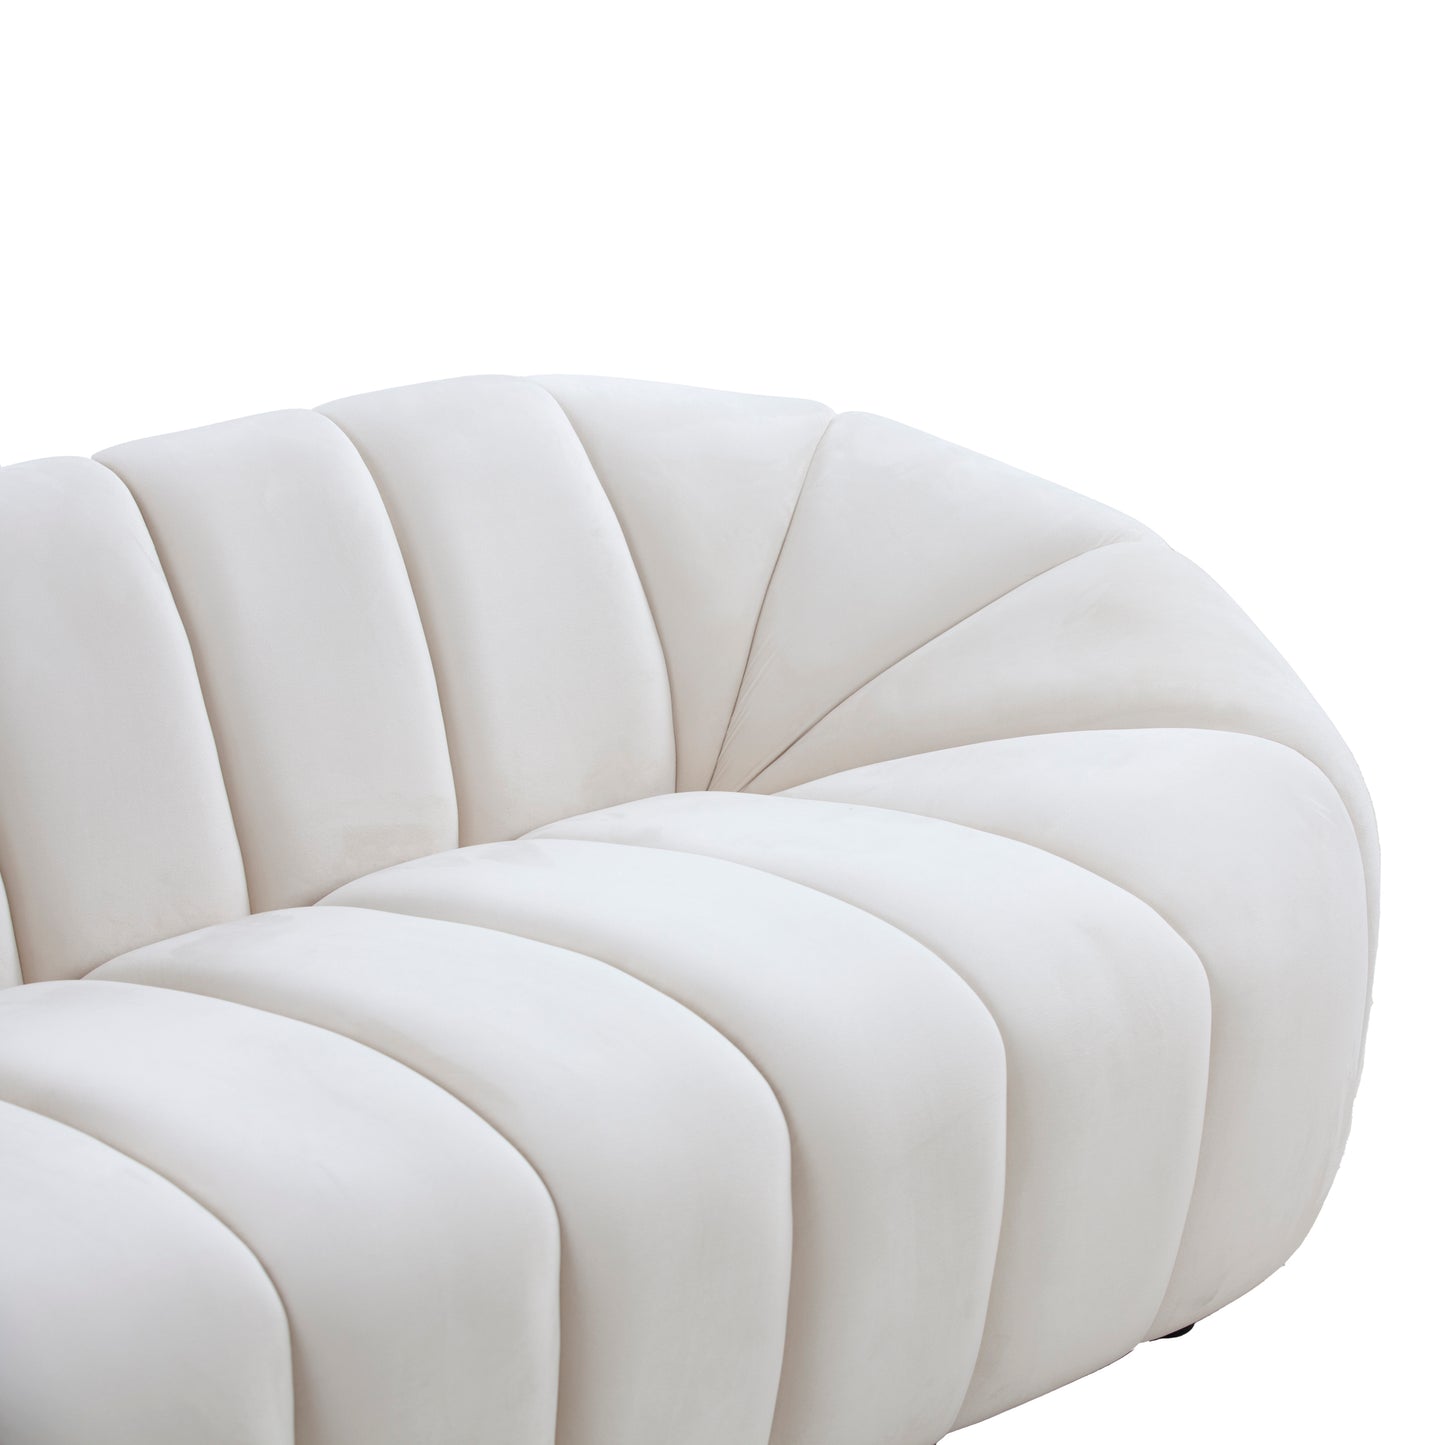 3 Seater Modern Sofa with Deep Channel Tufted Performance Velvet Sofa for Living Room